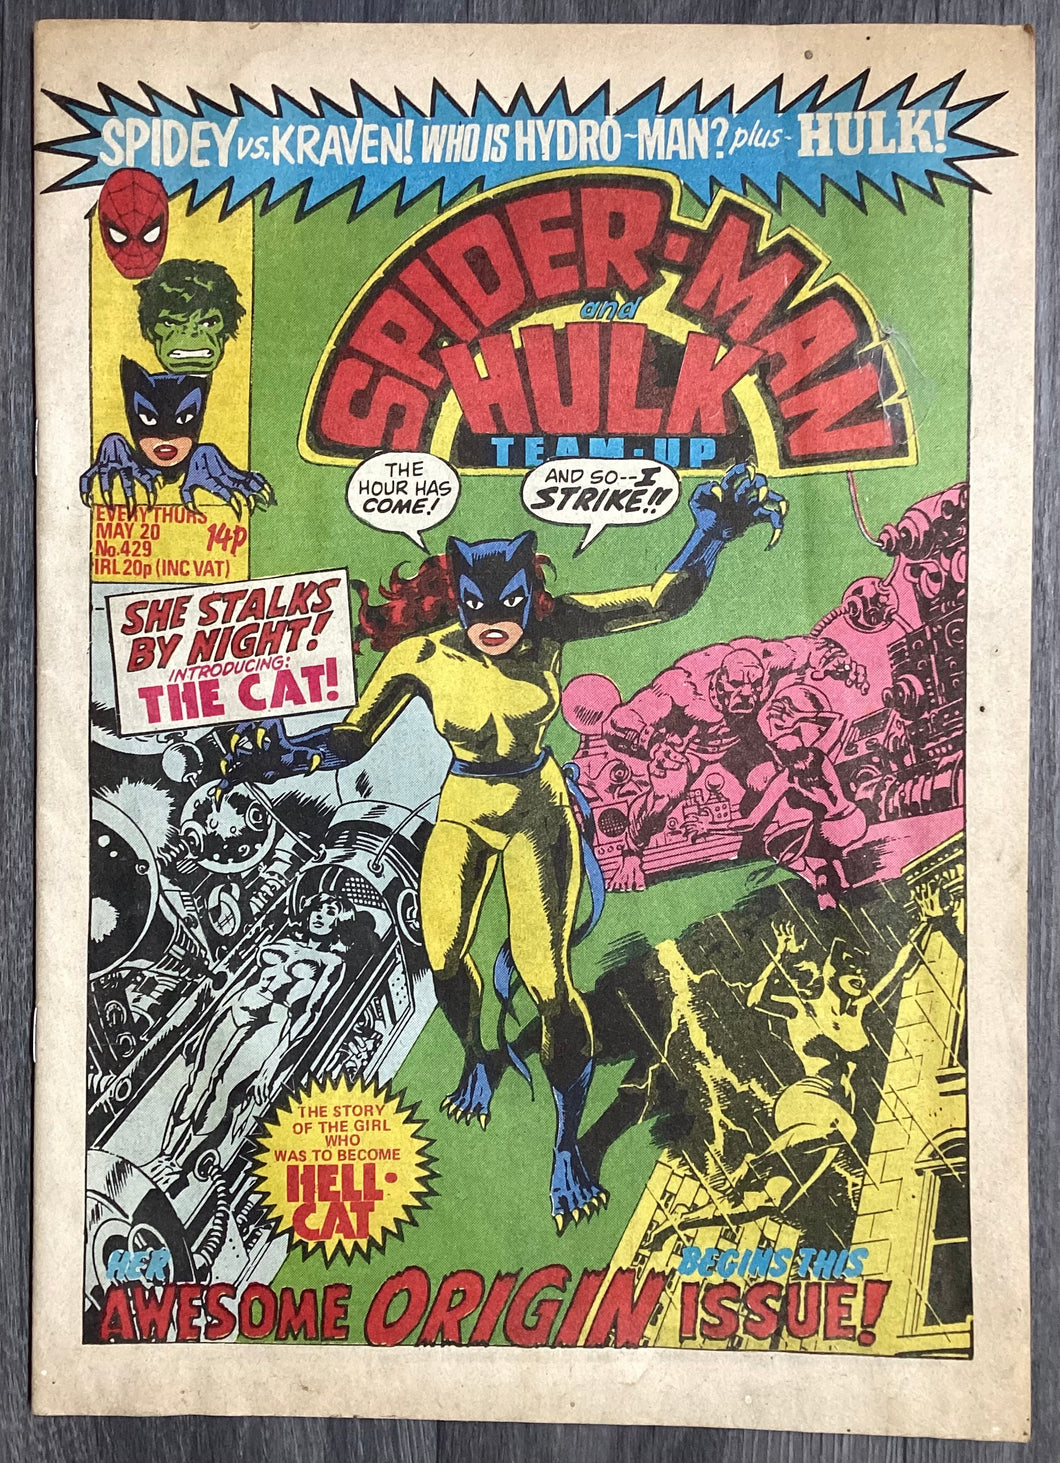 Spider-Man & Hulk Team-Up No. #428 1981 Marvel Comics UK